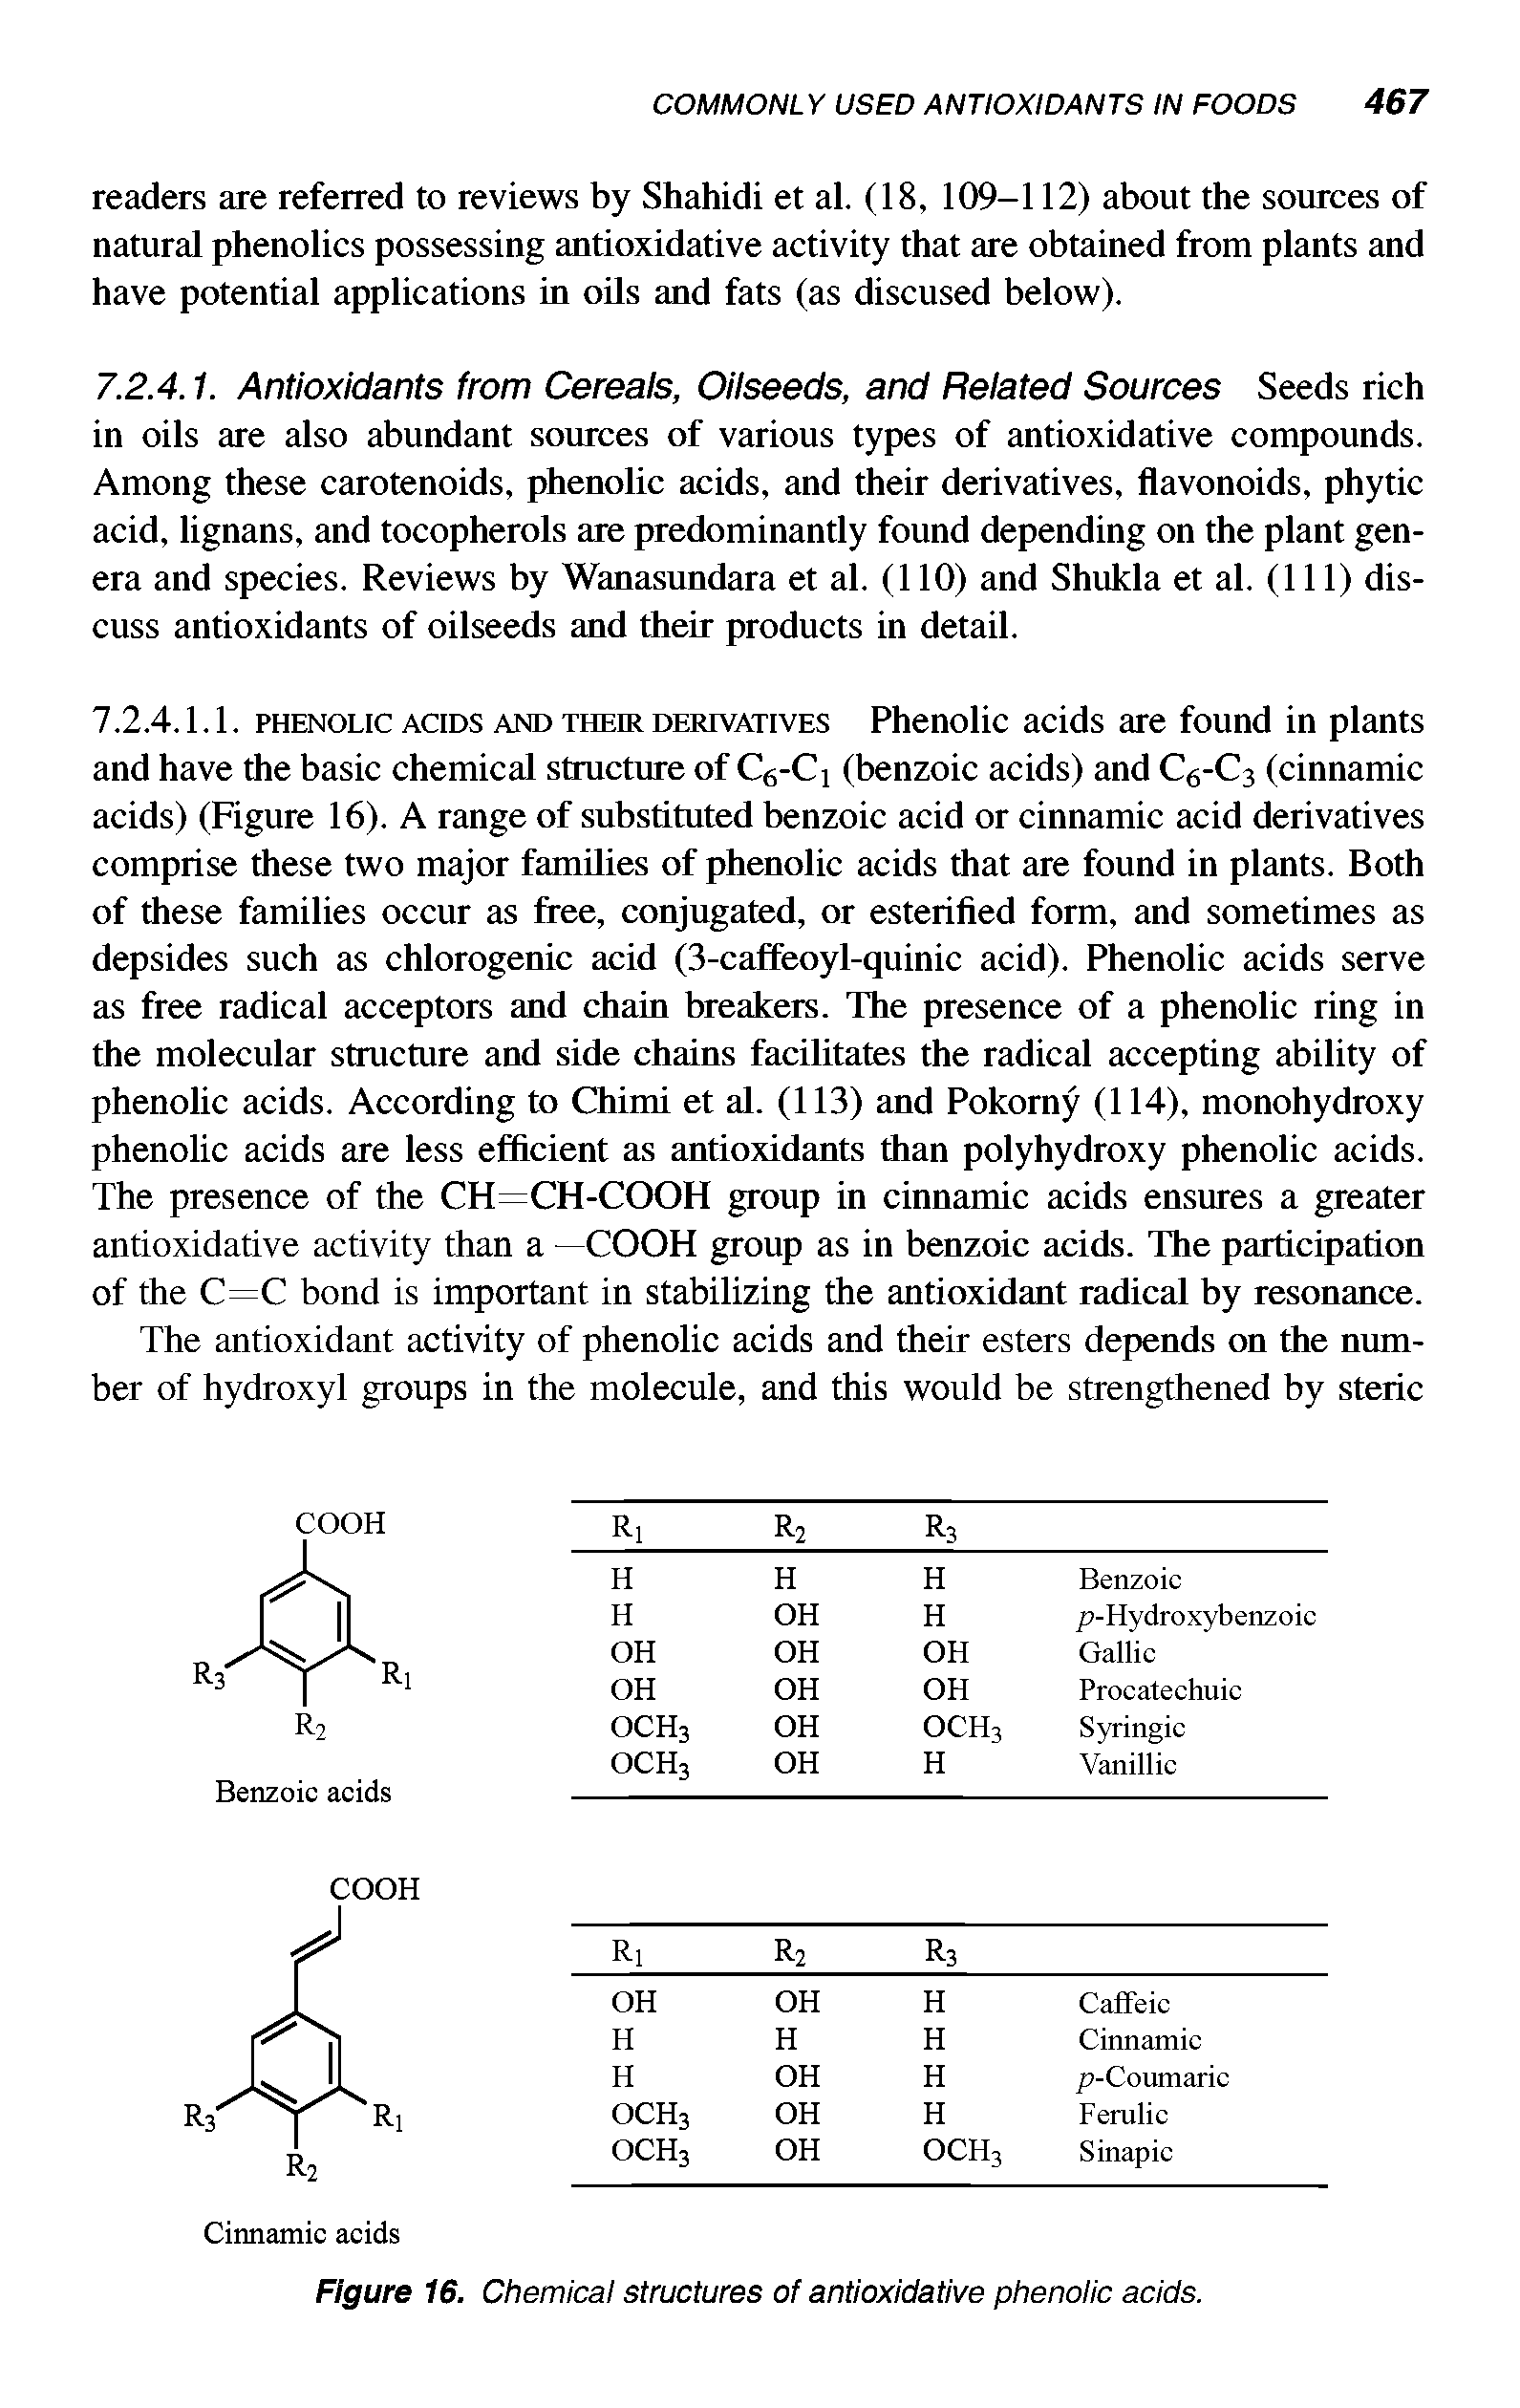 Figure 16. Chemical structures of antioxidative phenolic acids.